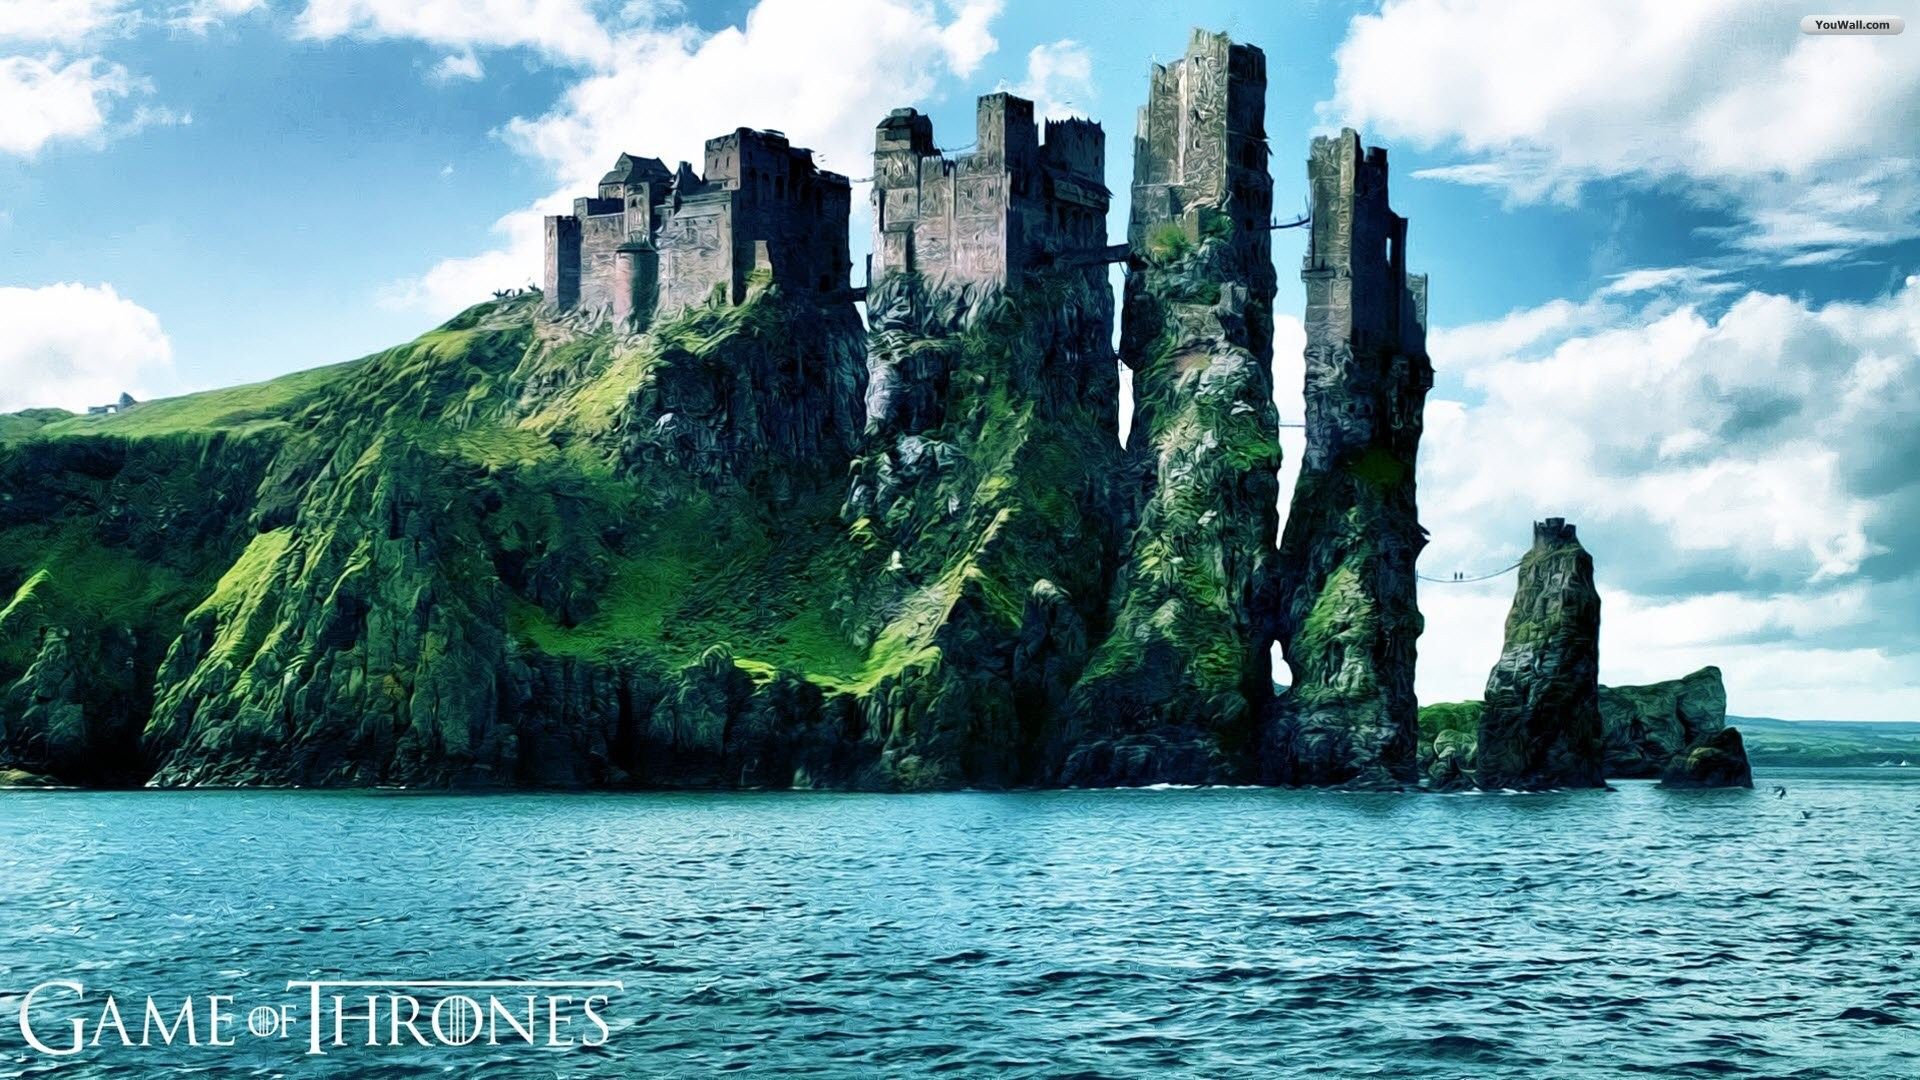 Game Of Thrones Hintergrundbild 1920x1080. 1920x1080 castle pyke castle game of thrones wallpaper JPG 542 kB Gallery HD Wallpaper